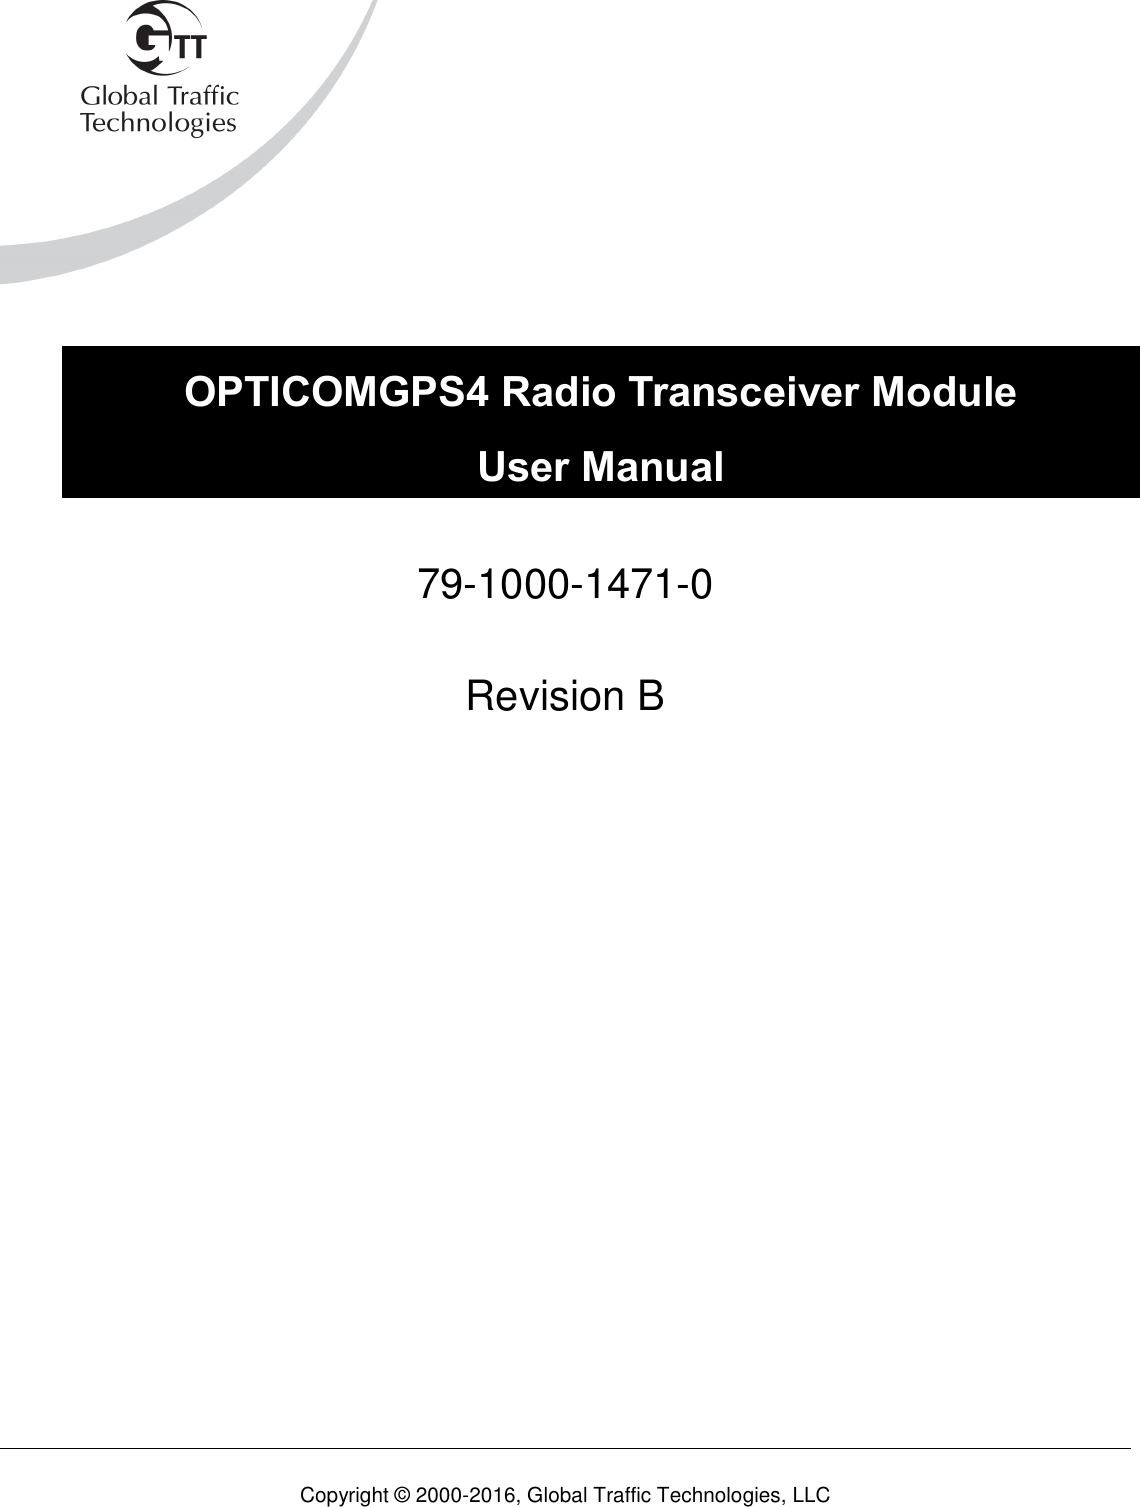   Copyright © 2000-2016, Global Traffic Technologies, LLC        79-1000-1471-0  Revision B                   OPTICOMGPS4 Radio Transceiver Module User Manual 